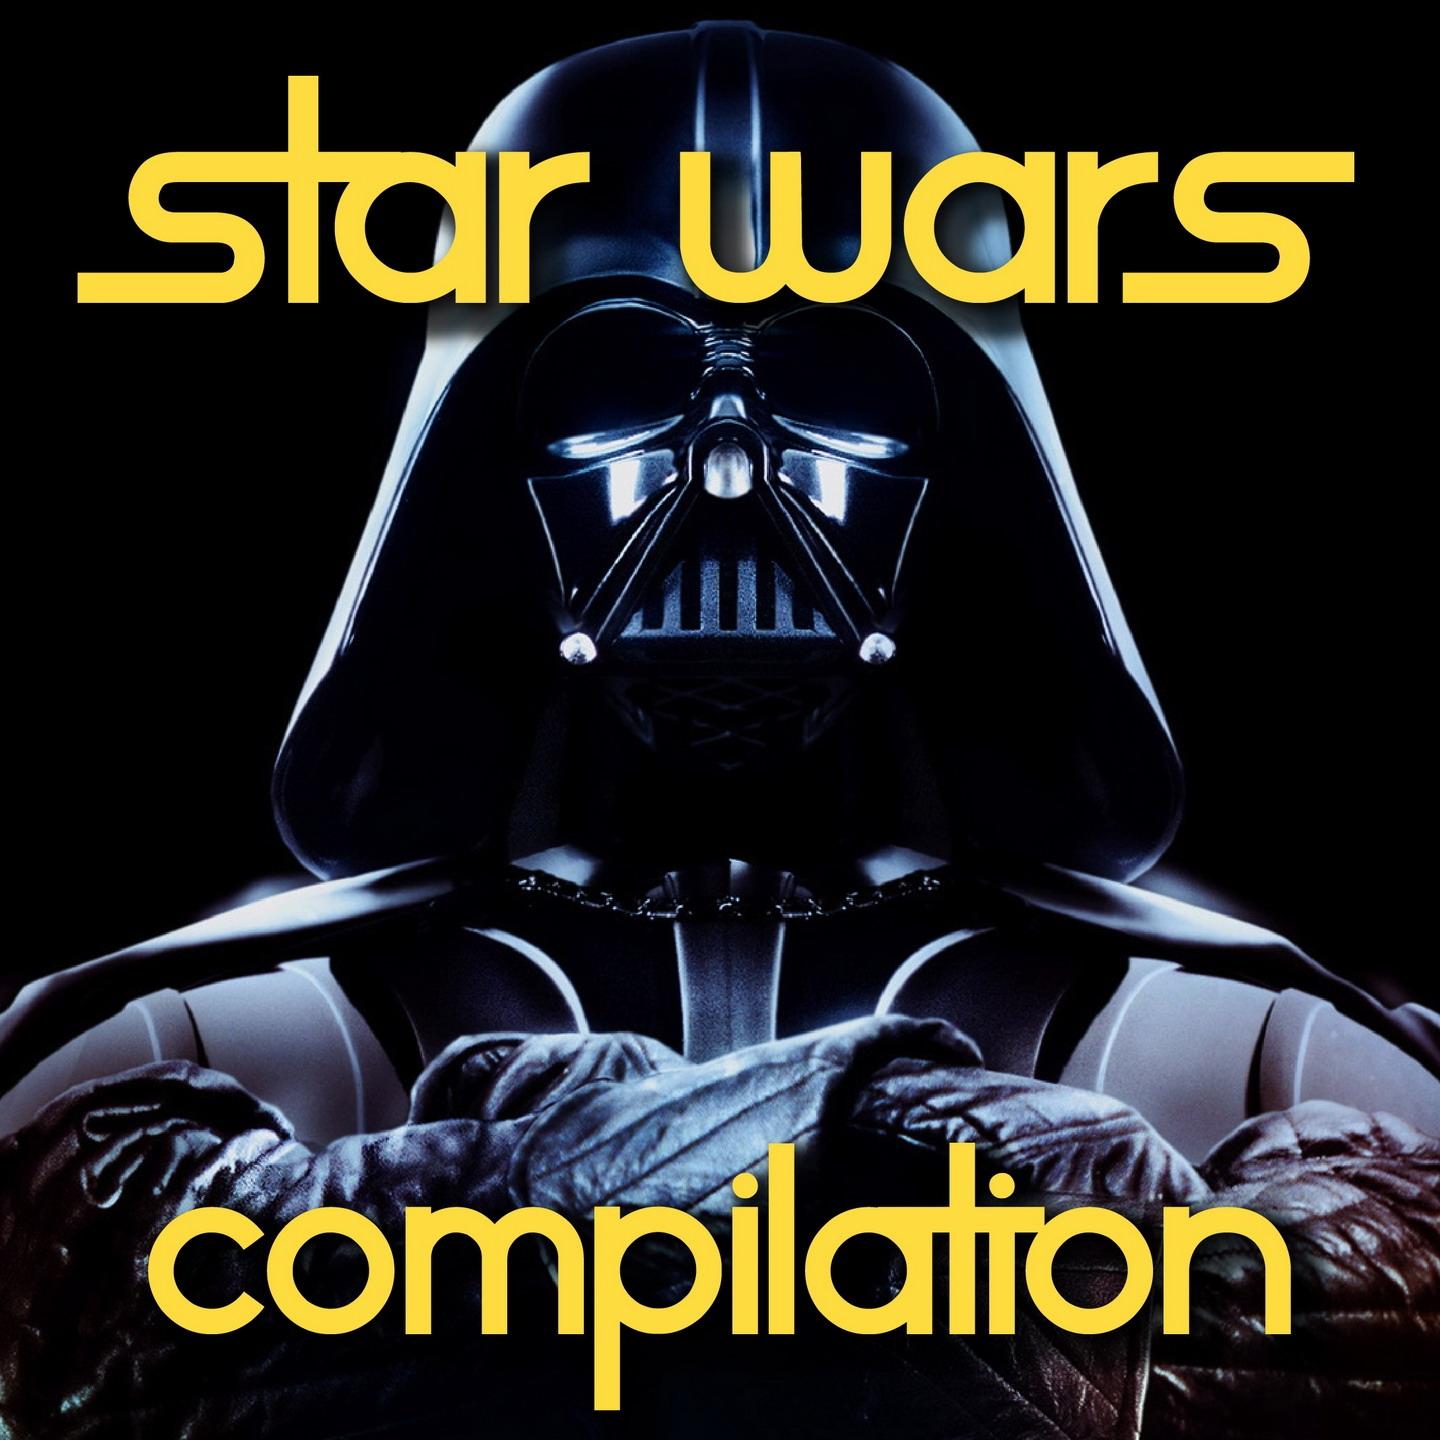 Star Wars Compilation